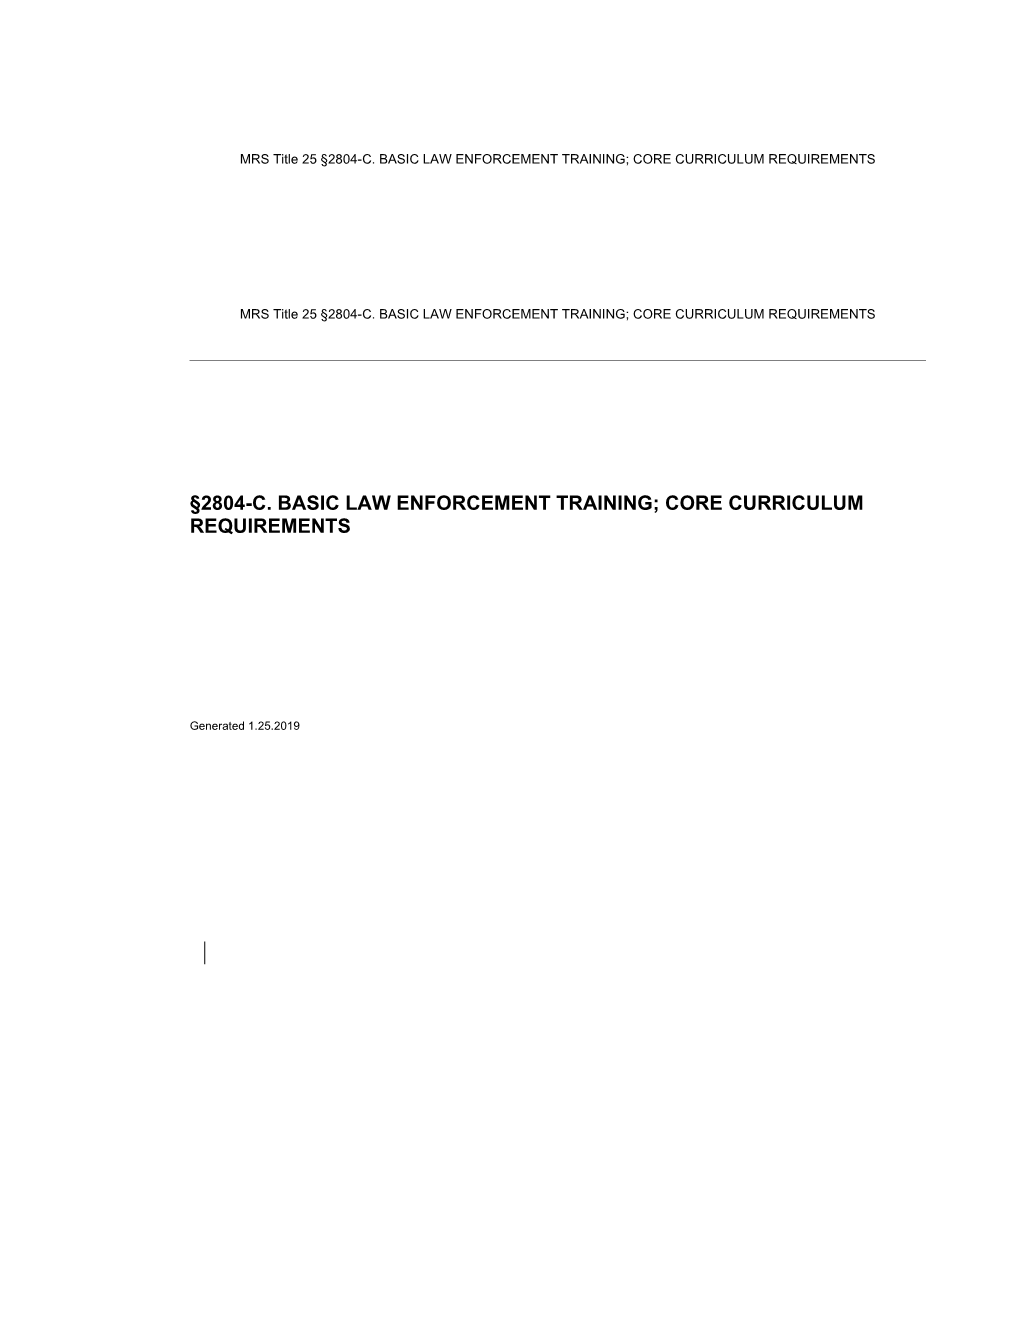 MRS Title 25 2804-C. BASIC LAW ENFORCEMENT TRAINING; CORE CURRICULUM REQUIREMENTS